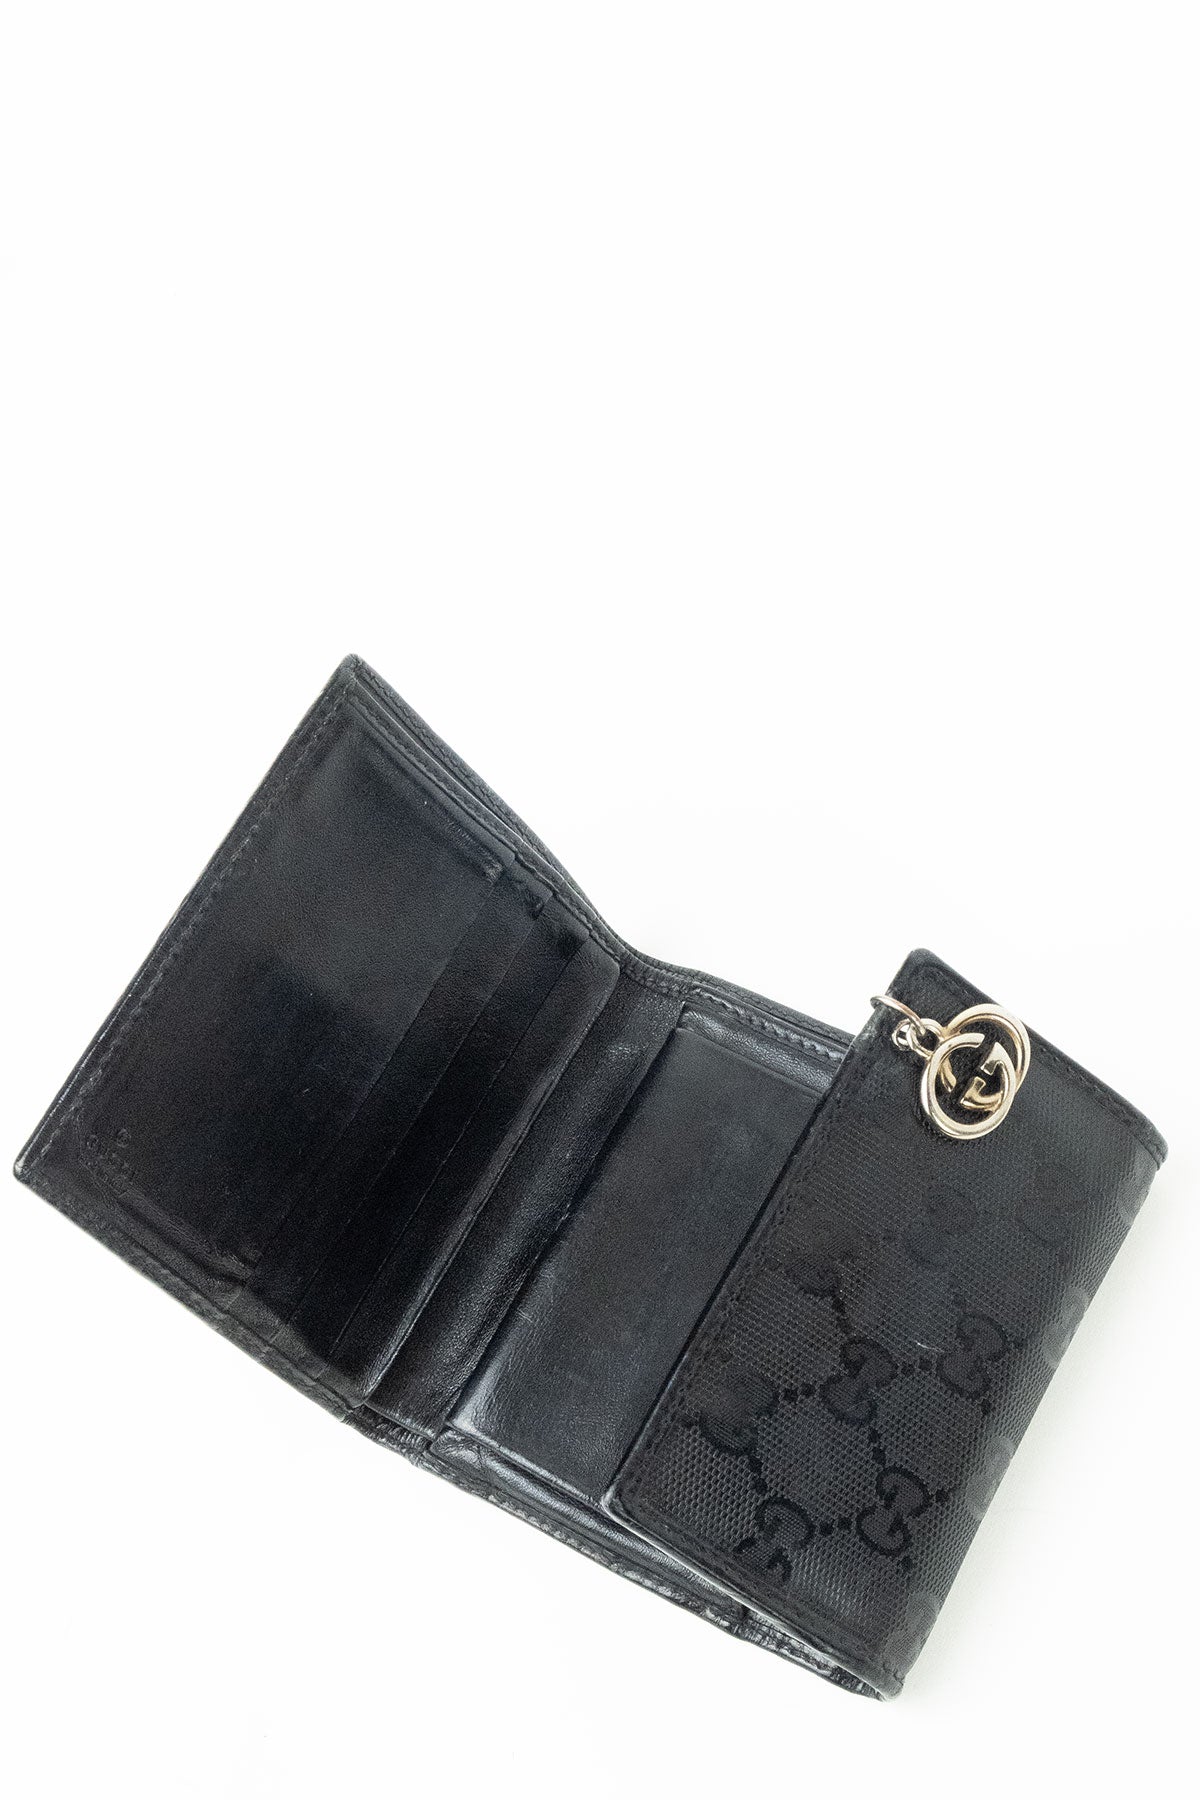 Vintage Gucci Black GG Canvas Trifold Wallet - Jade Vintage